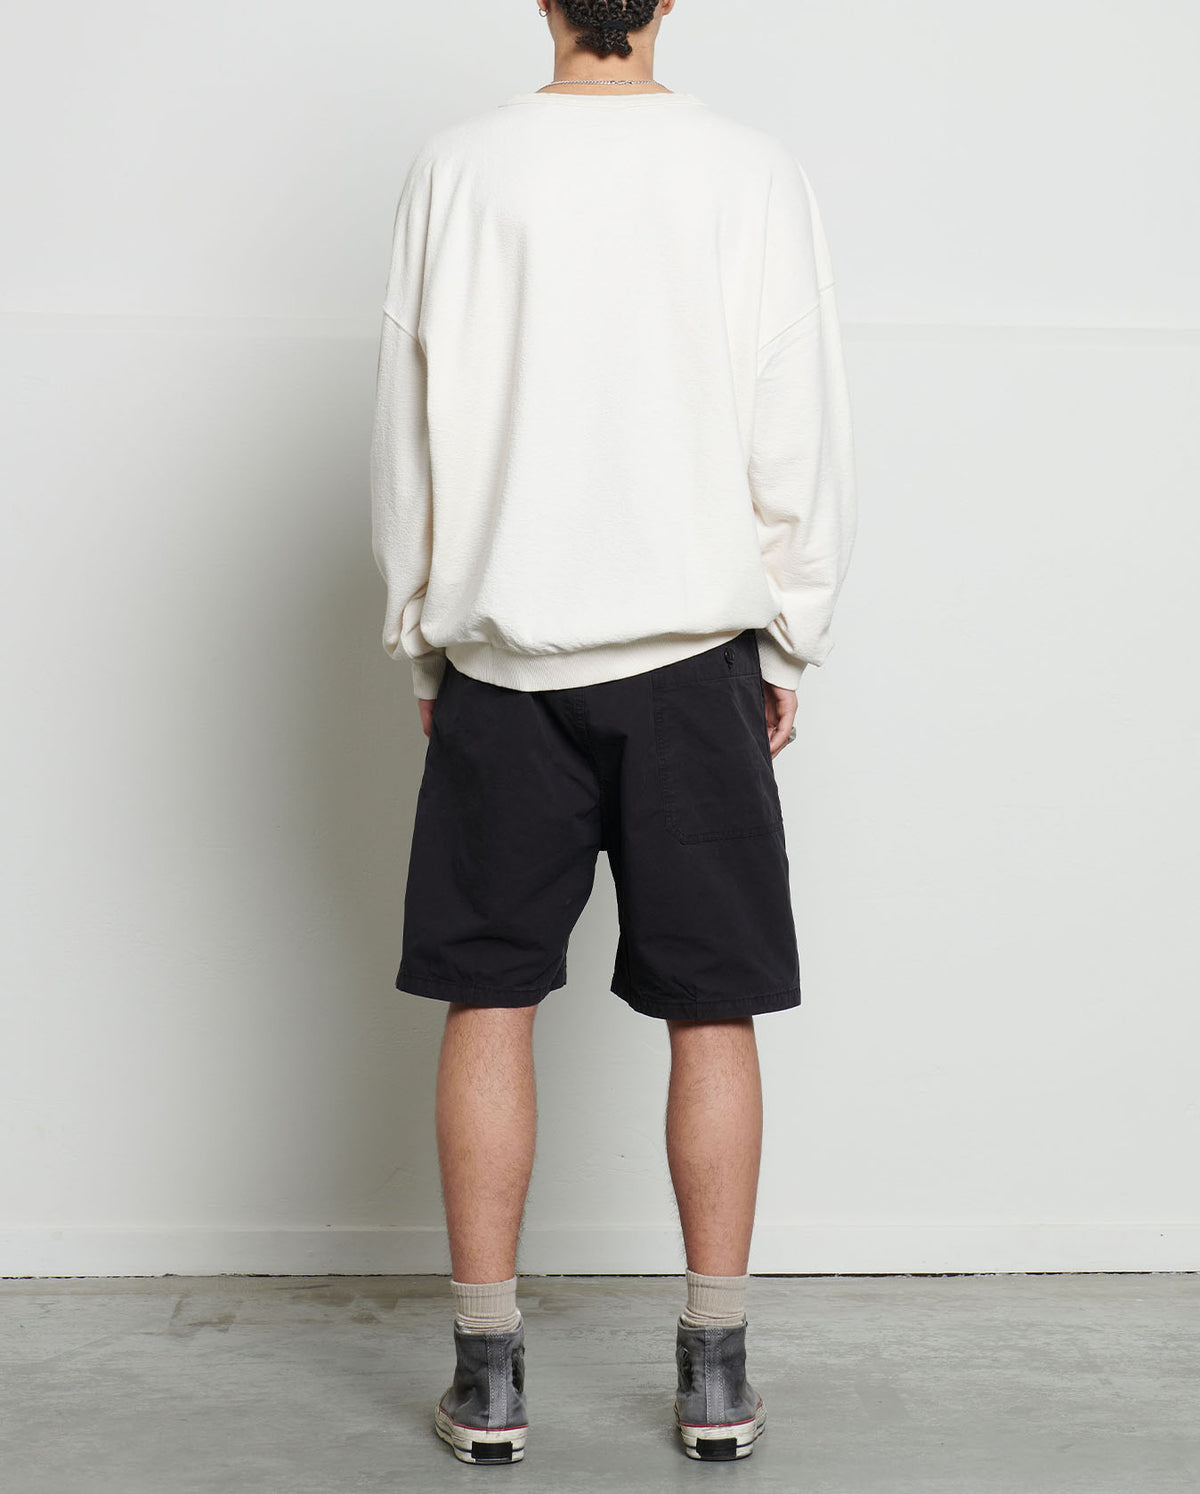 Structured Cotton Sweater - Light Ecru